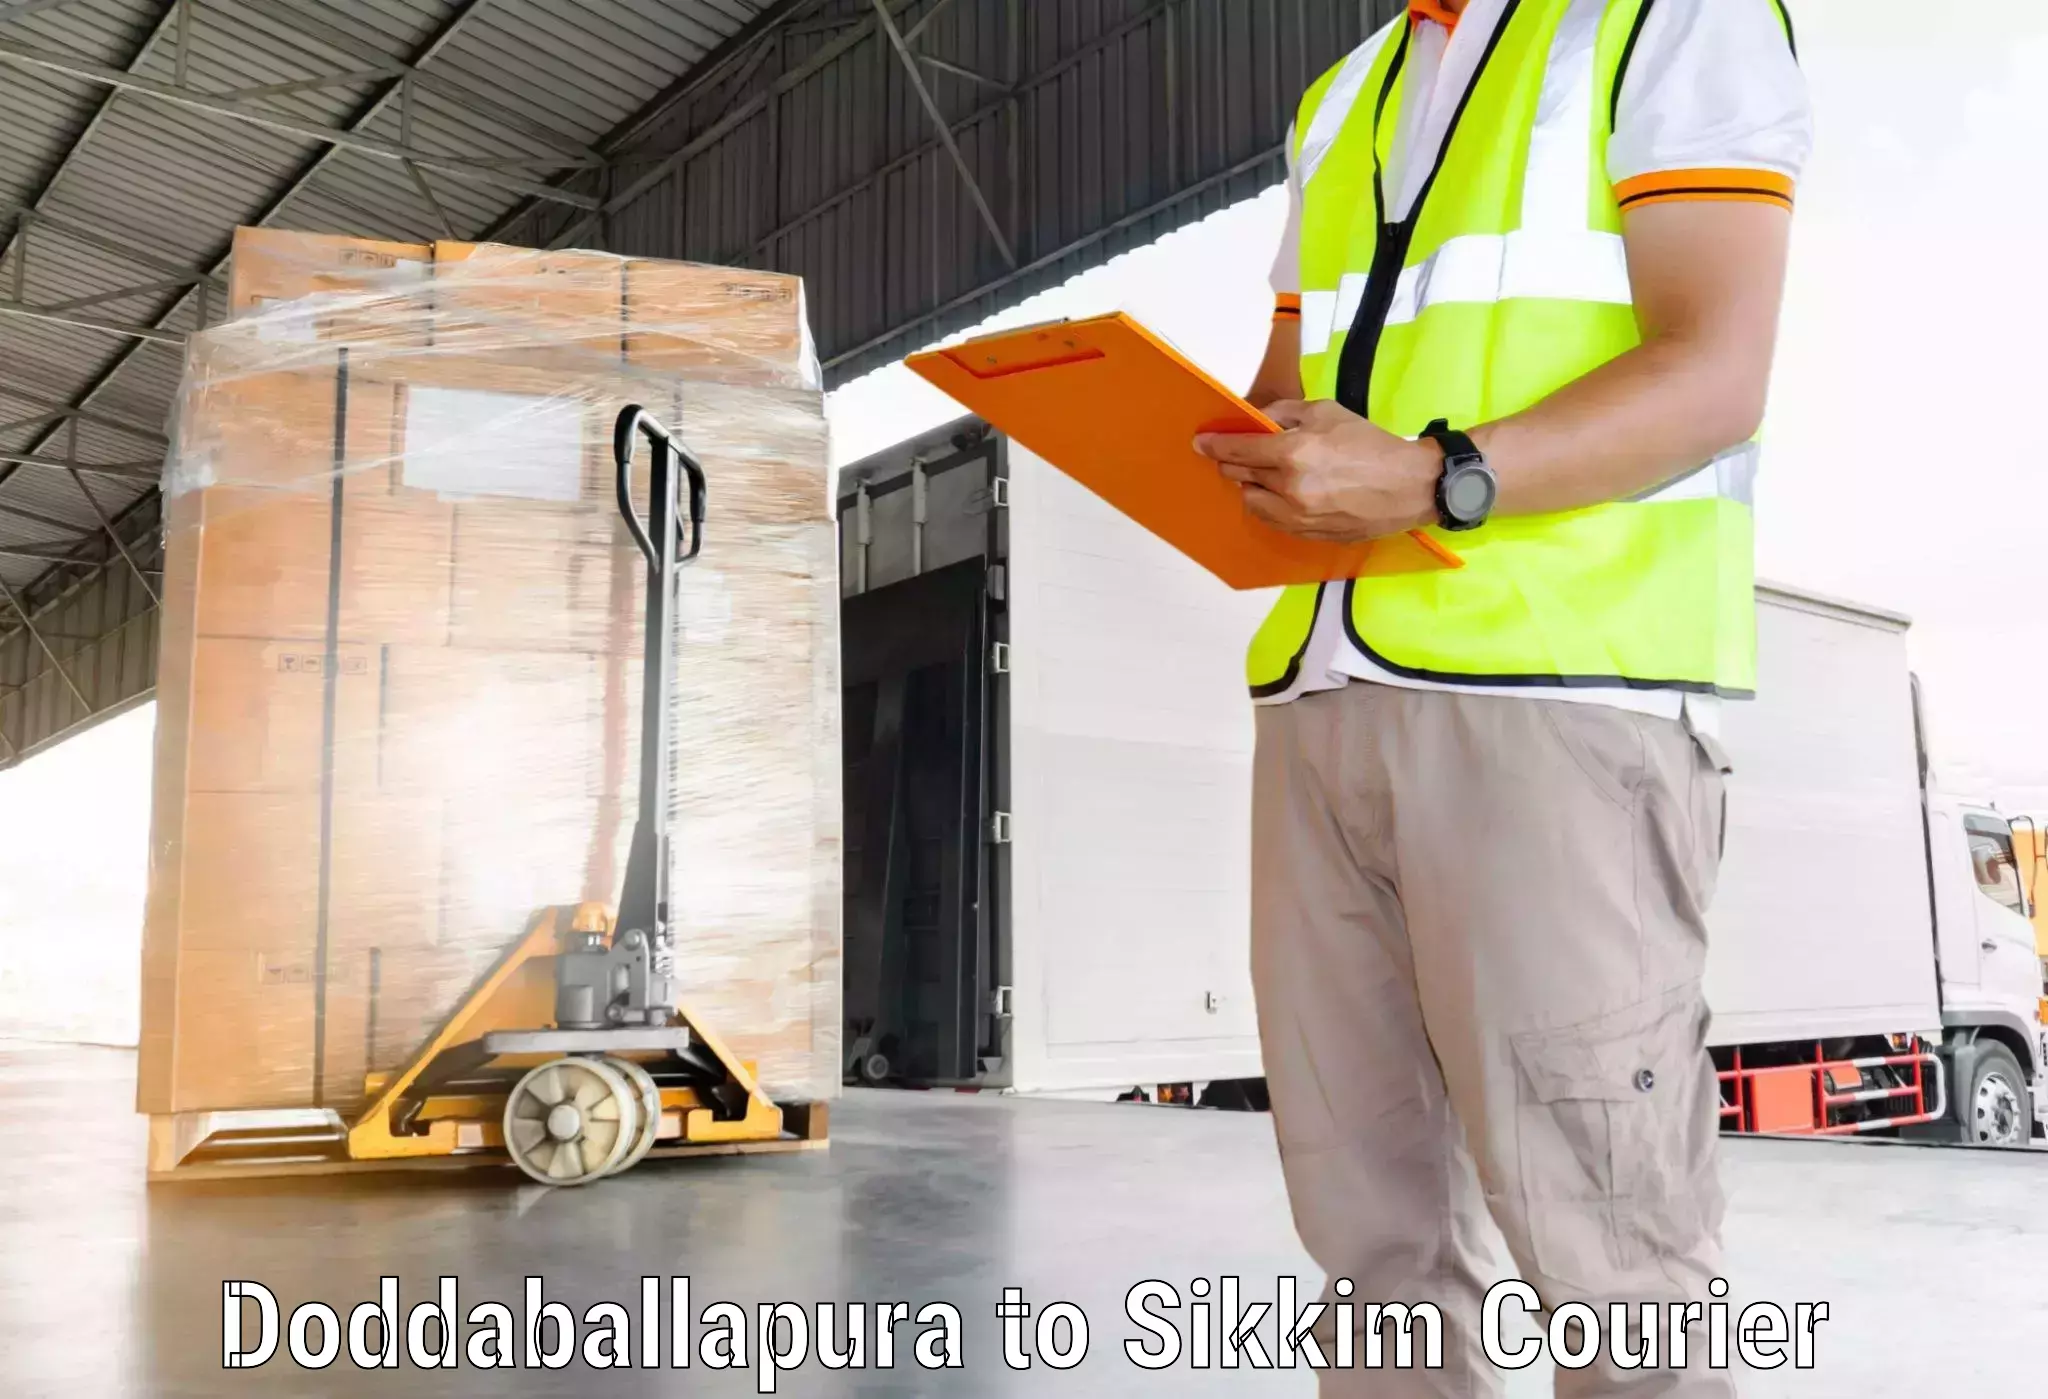 Next-day delivery options Doddaballapura to Geyzing